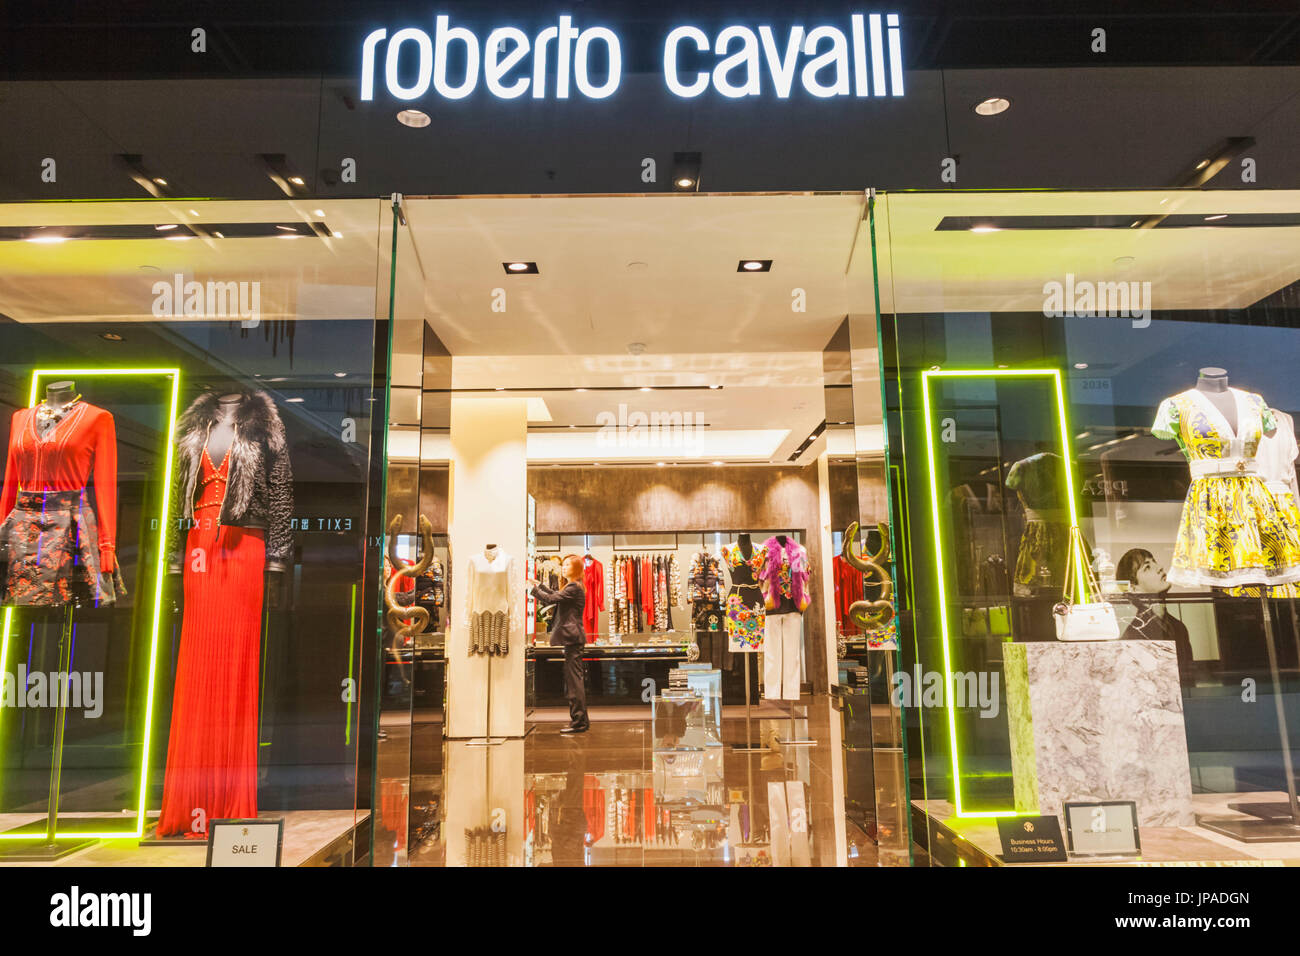 Cina, Hong Kong, centrale, IFC Shopping Mall, Roberto Cavalli Store Foto Stock